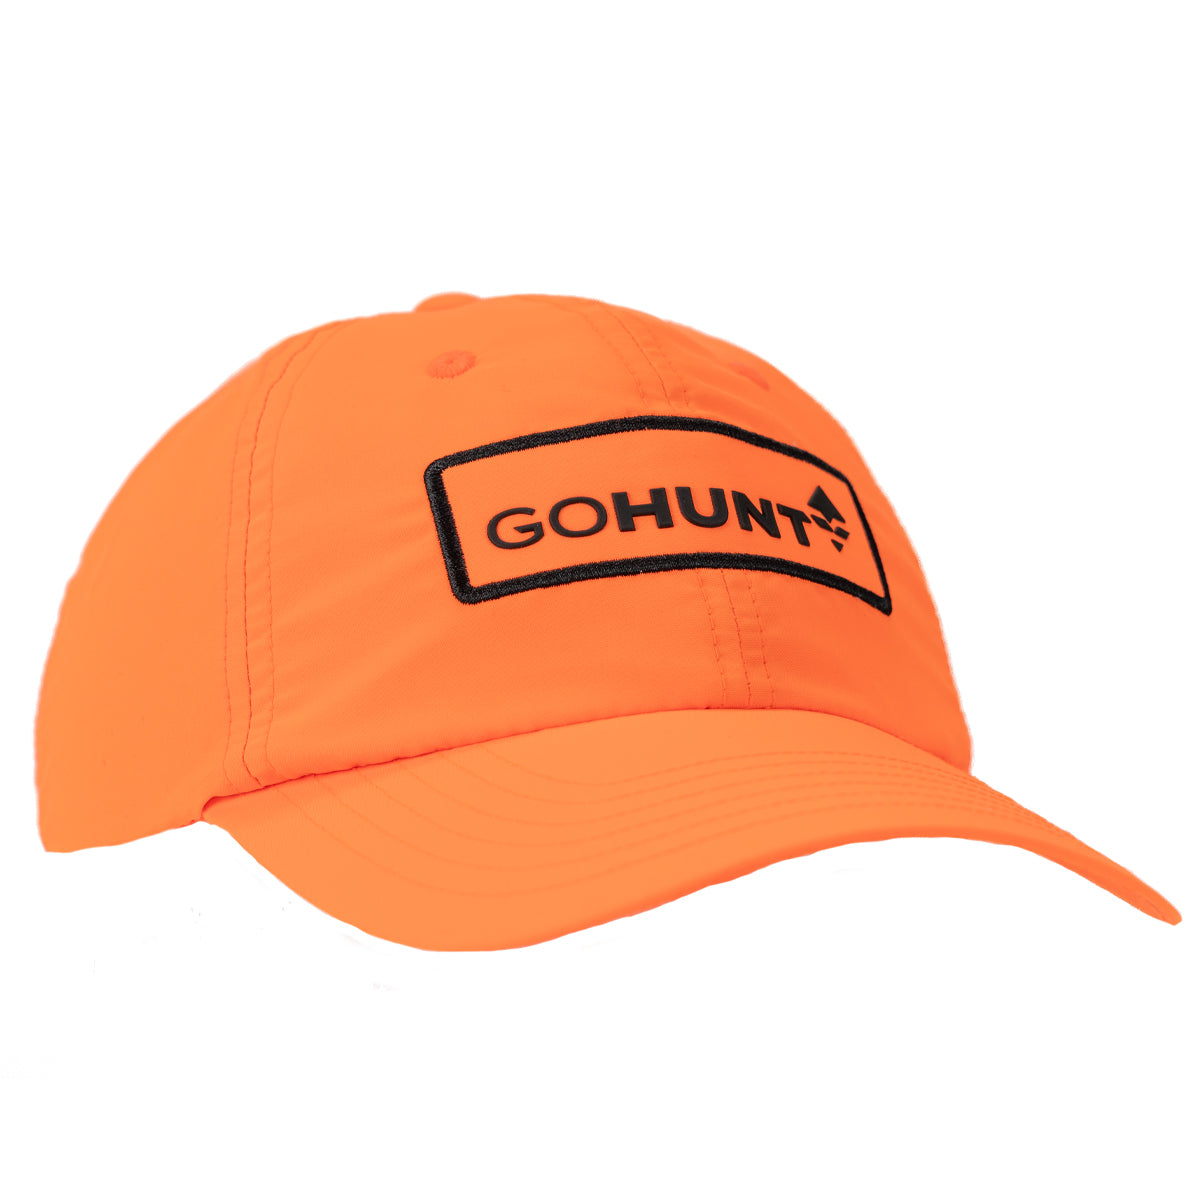 GOHUNT Blinds Hat in  by GOHUNT | GOHUNT - GOHUNT Shop